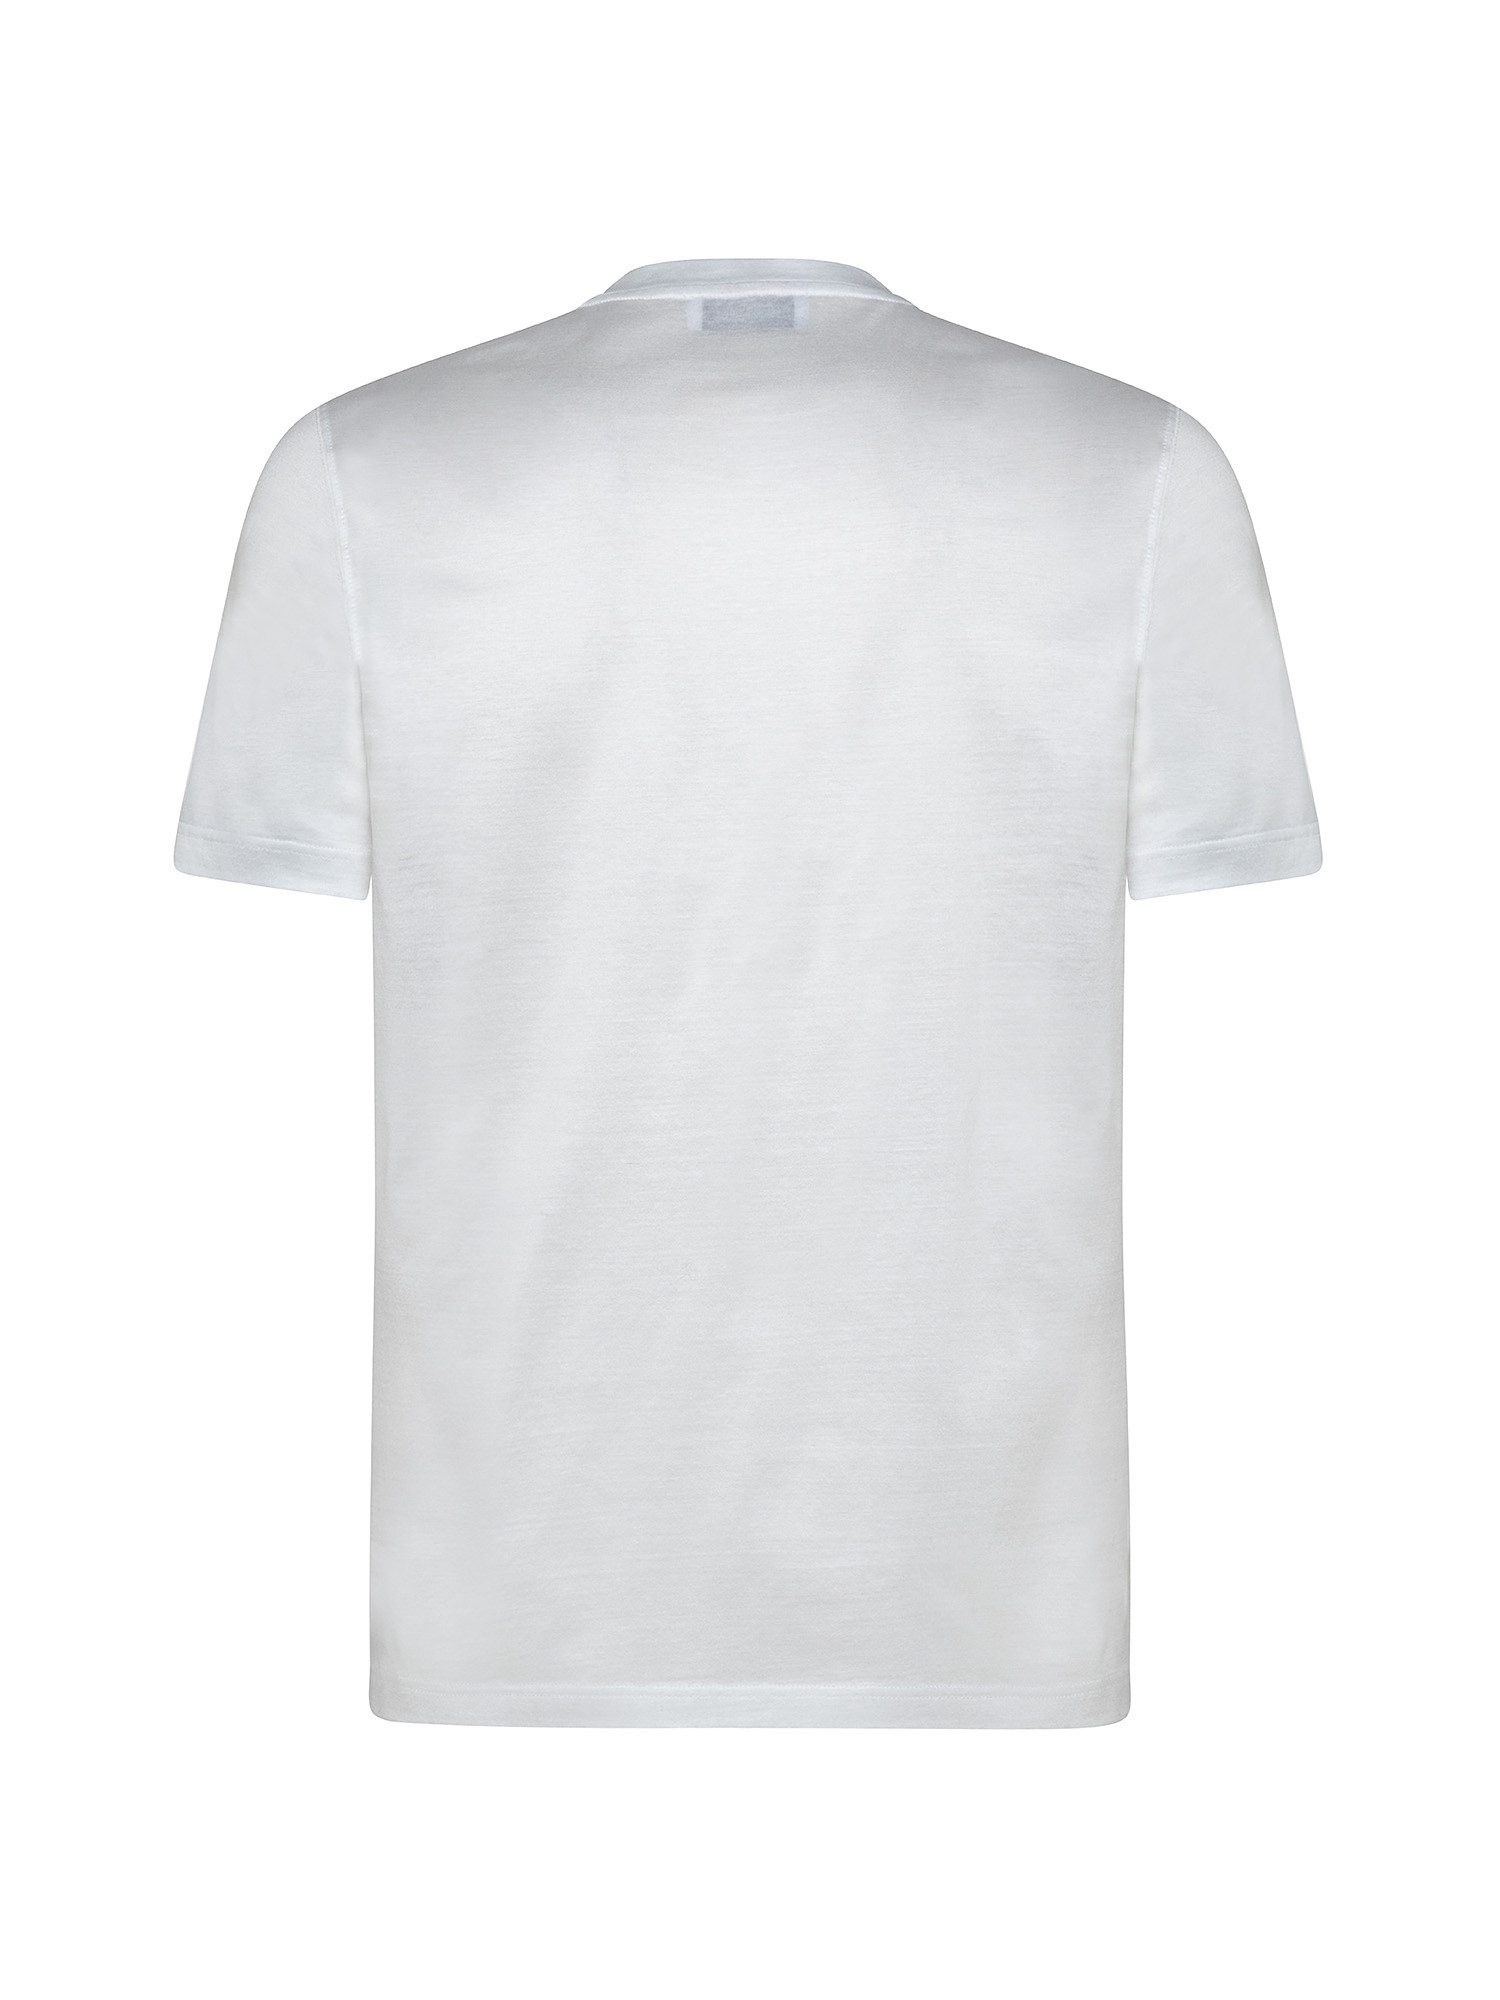 T-shirt girocollo manica corta, Bianco, large image number 1